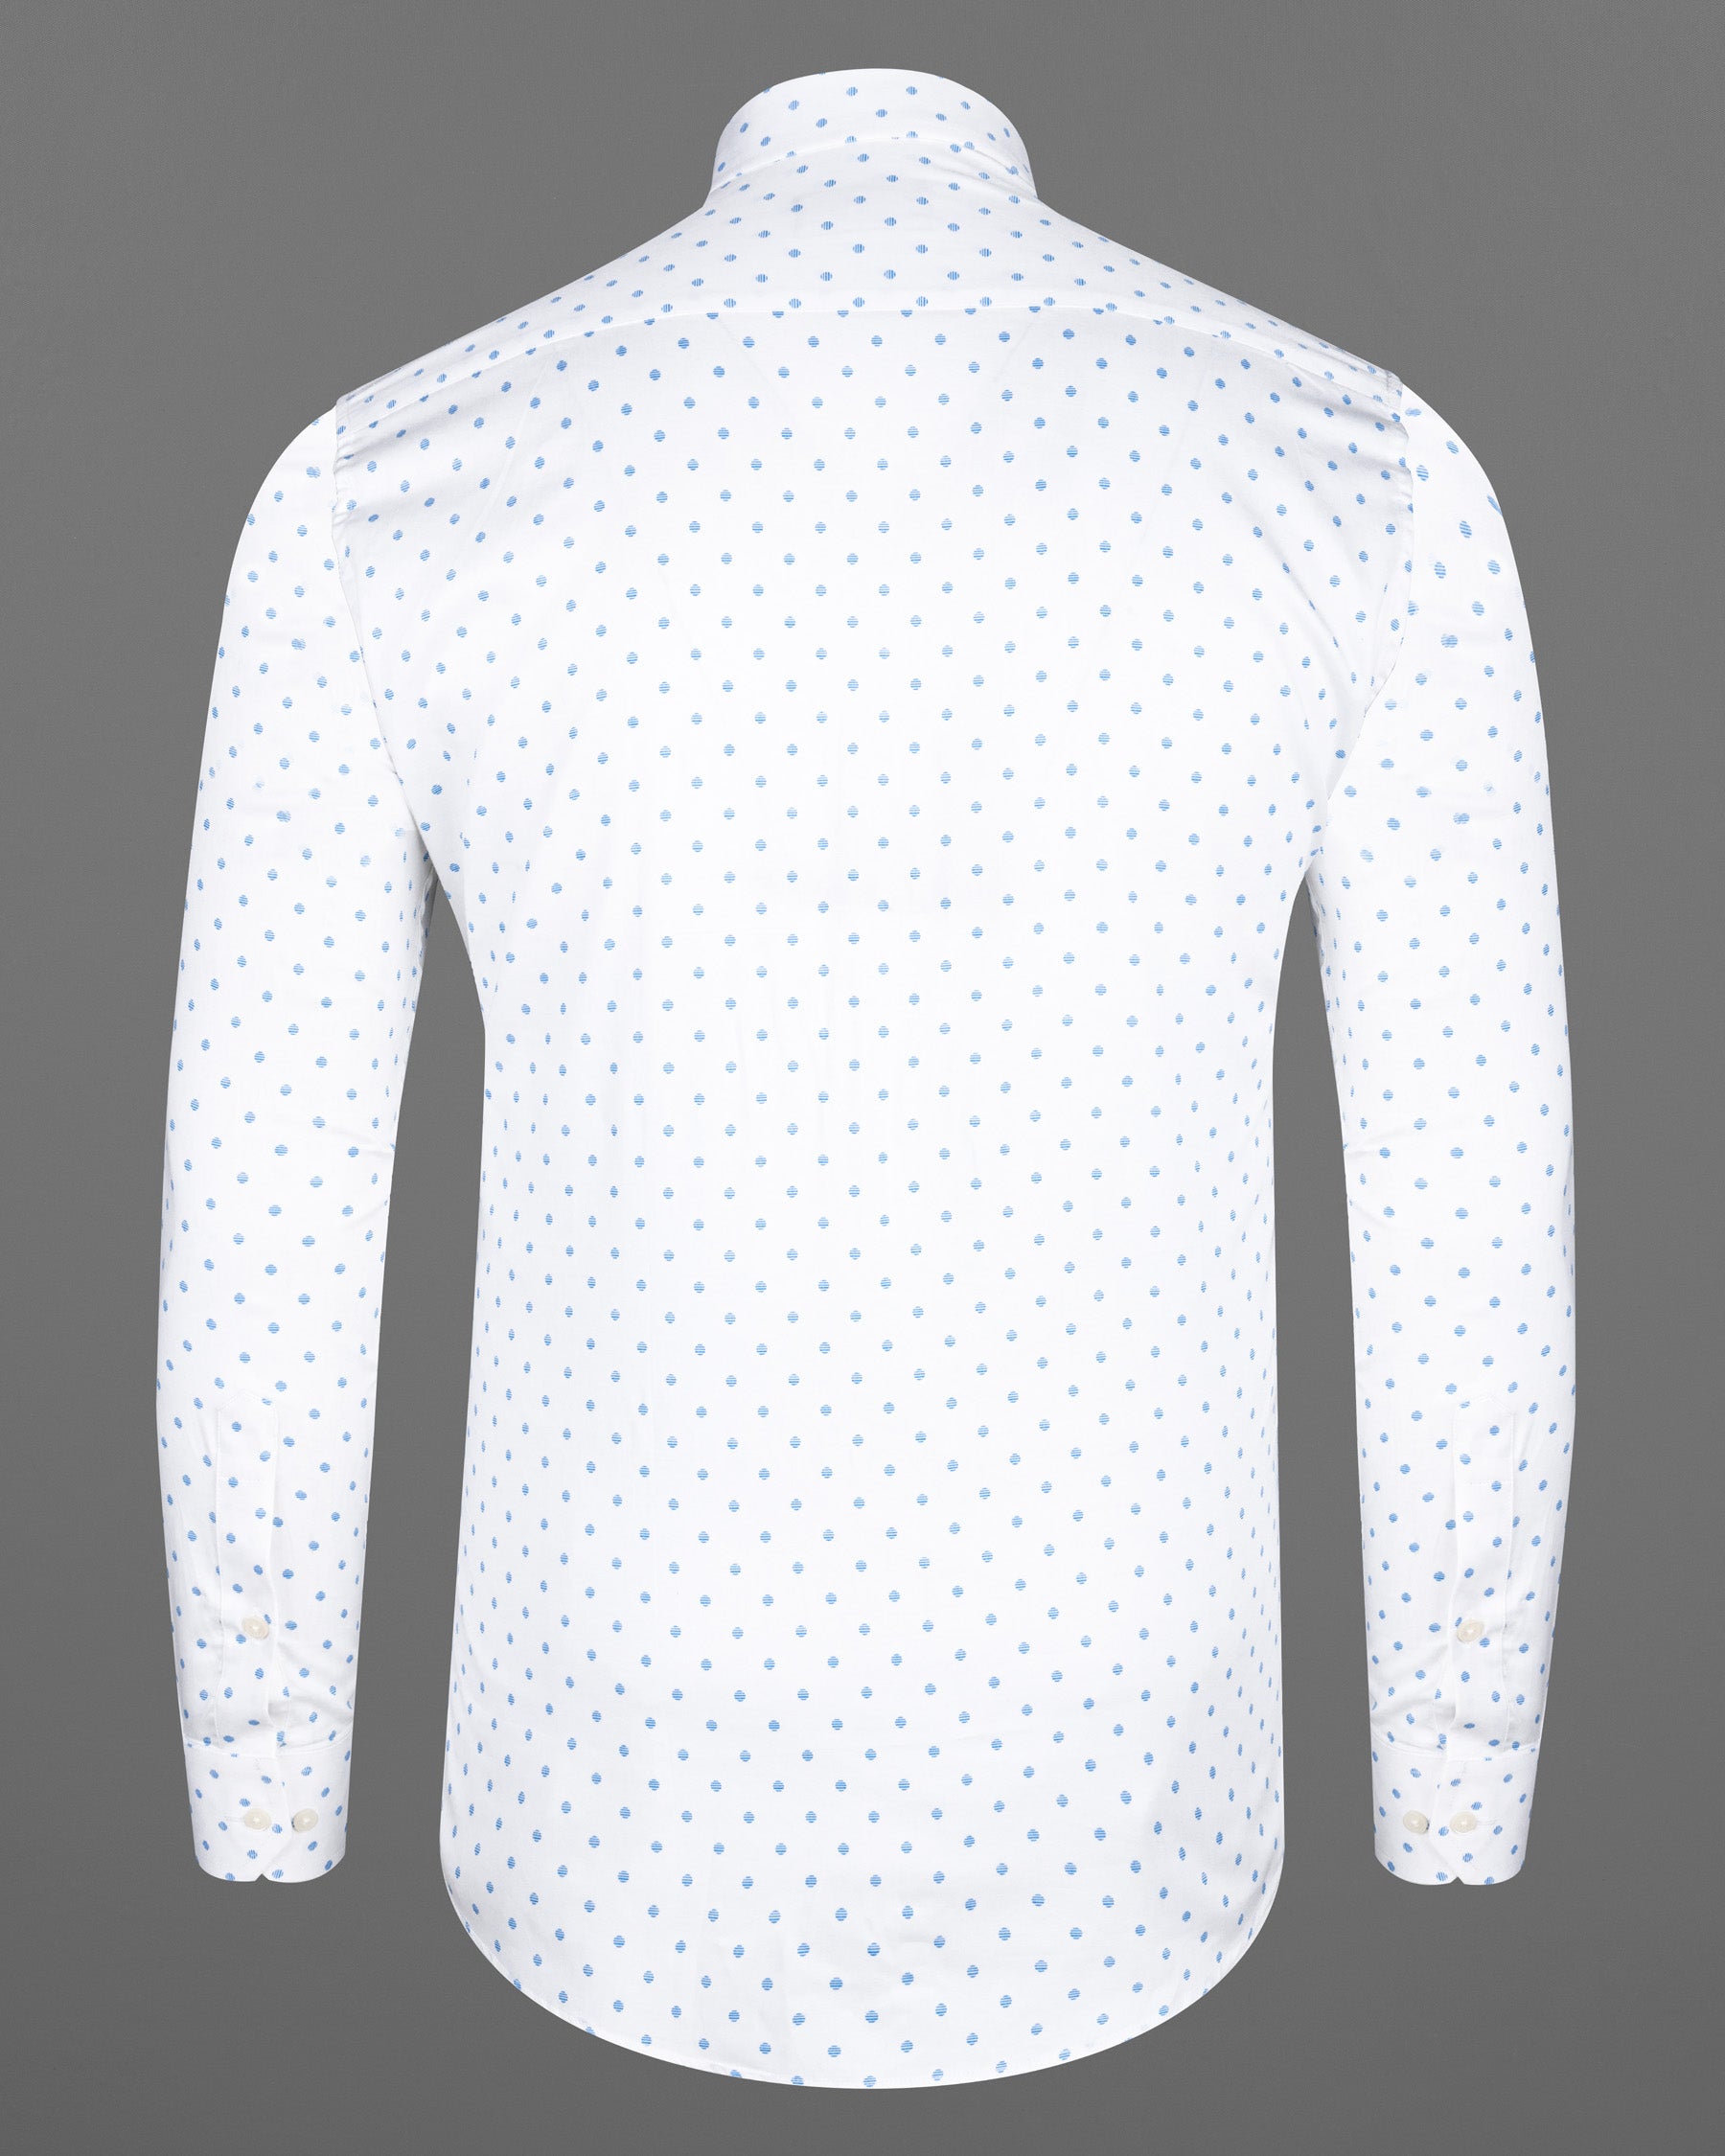 Bright White and Picton Blue Dotted Super Soft Premium Cotton Shirt 6978-38,6978-38,6978-39,6978-39,6978-40,6978-40,6978-42,6978-42,6978-44,6978-44,6978-46,6978-46,6978-48,6978-48,6978-50,6978-50,6978-52,6978-52